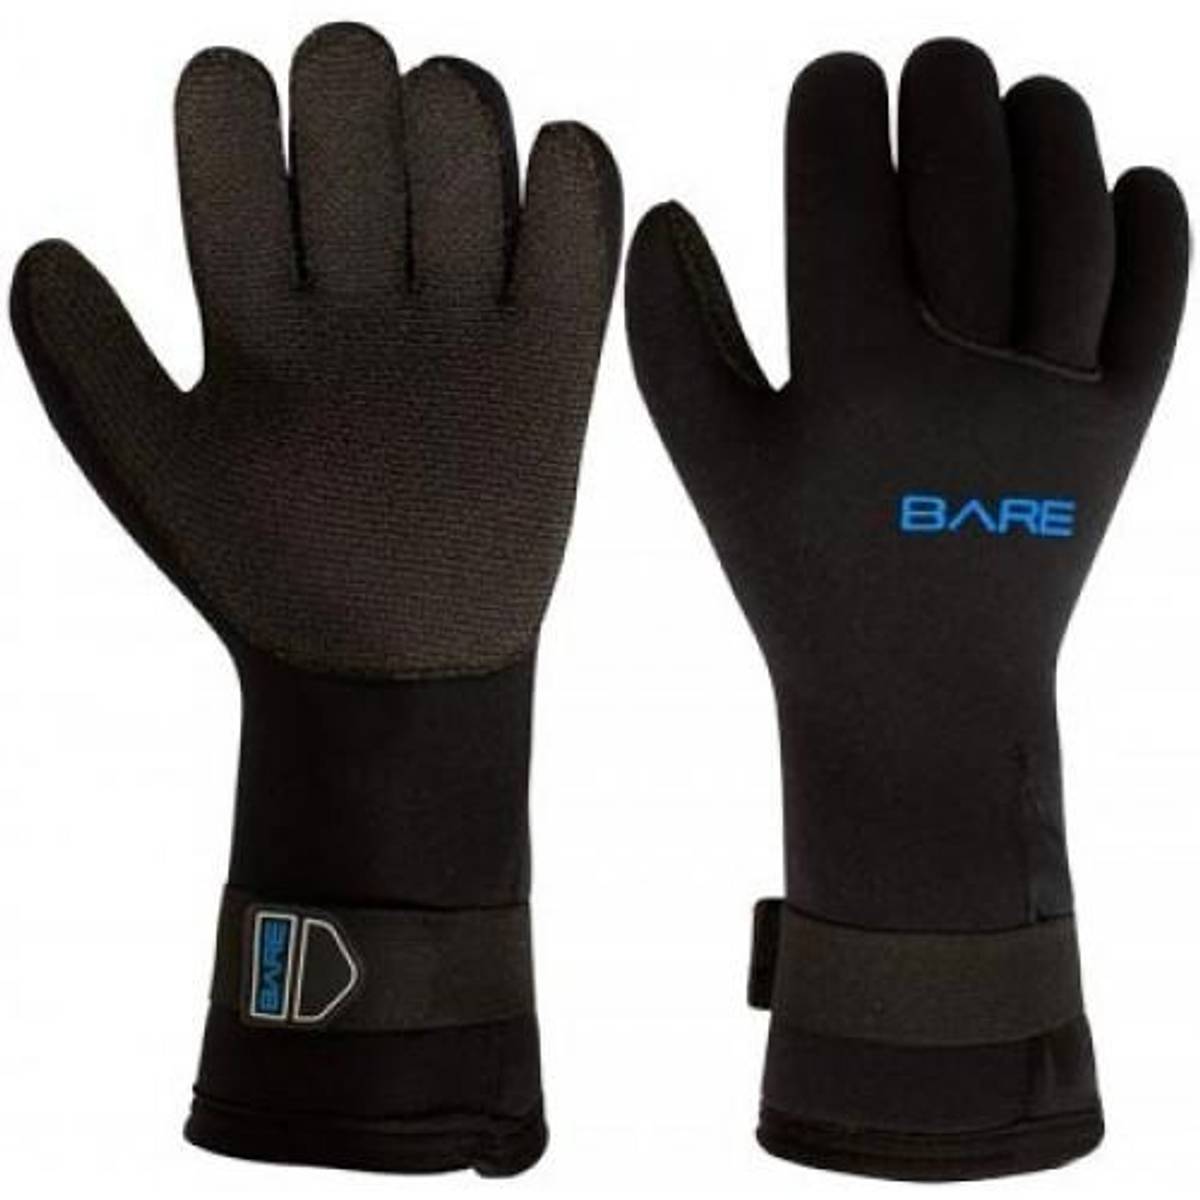 5mm K-palm Gauntlet Neoprene Gloves ONLY